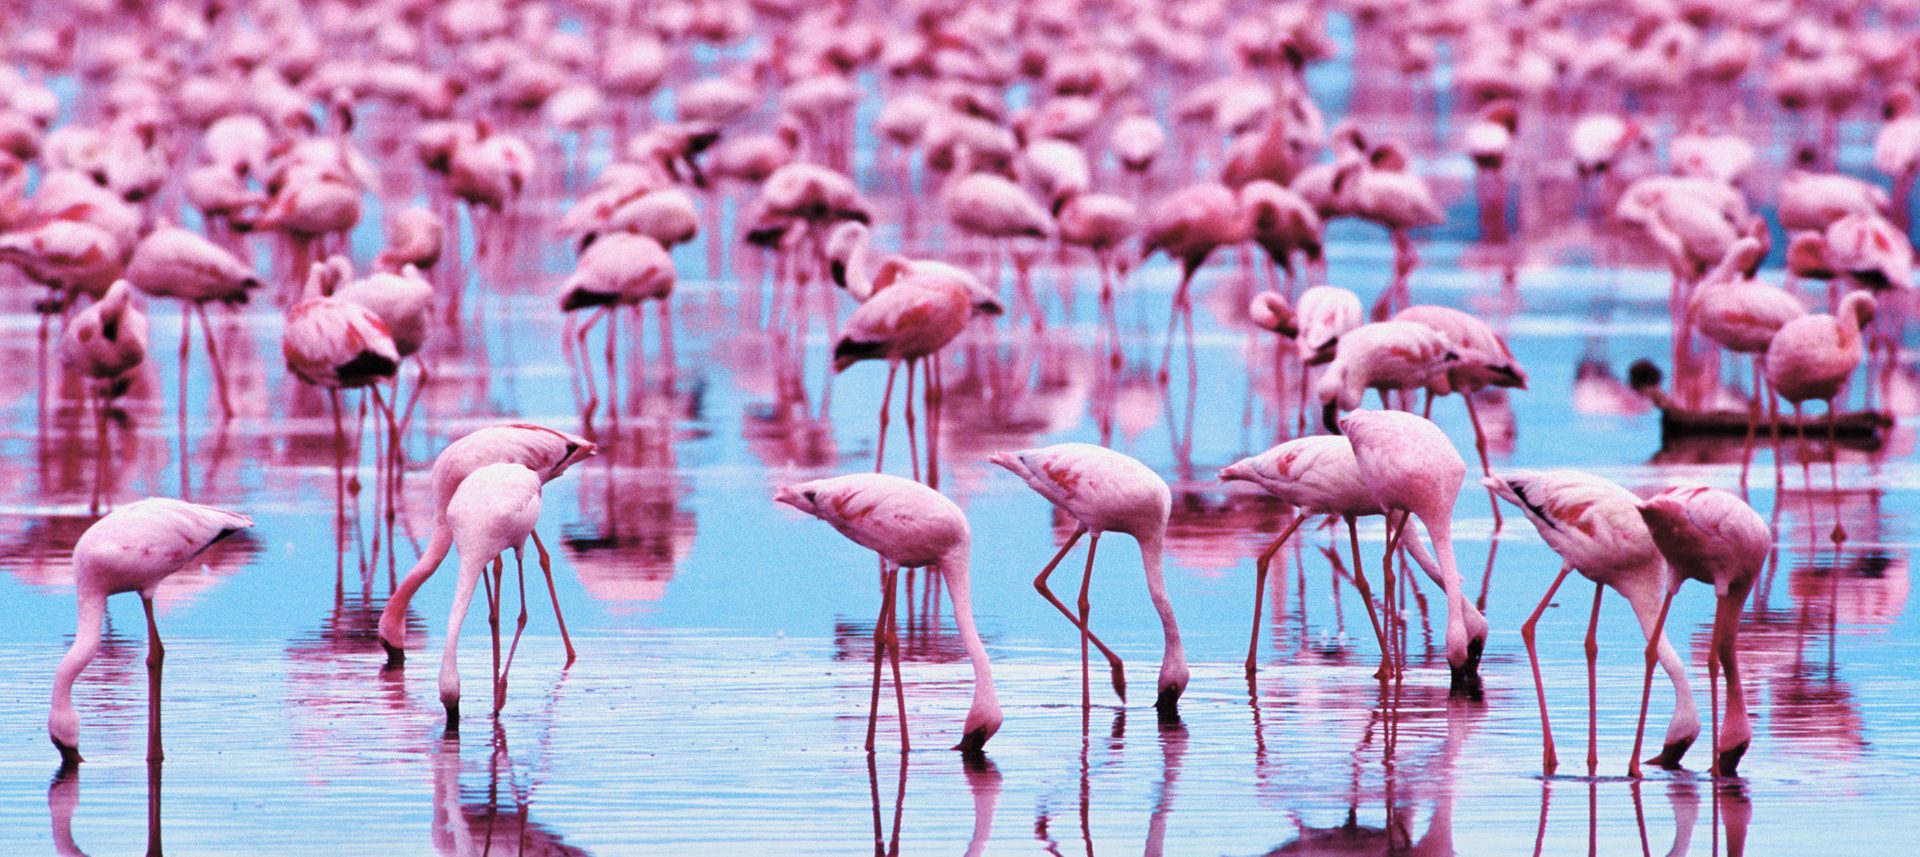 Flamingo Wallpaper Full HD Pictures